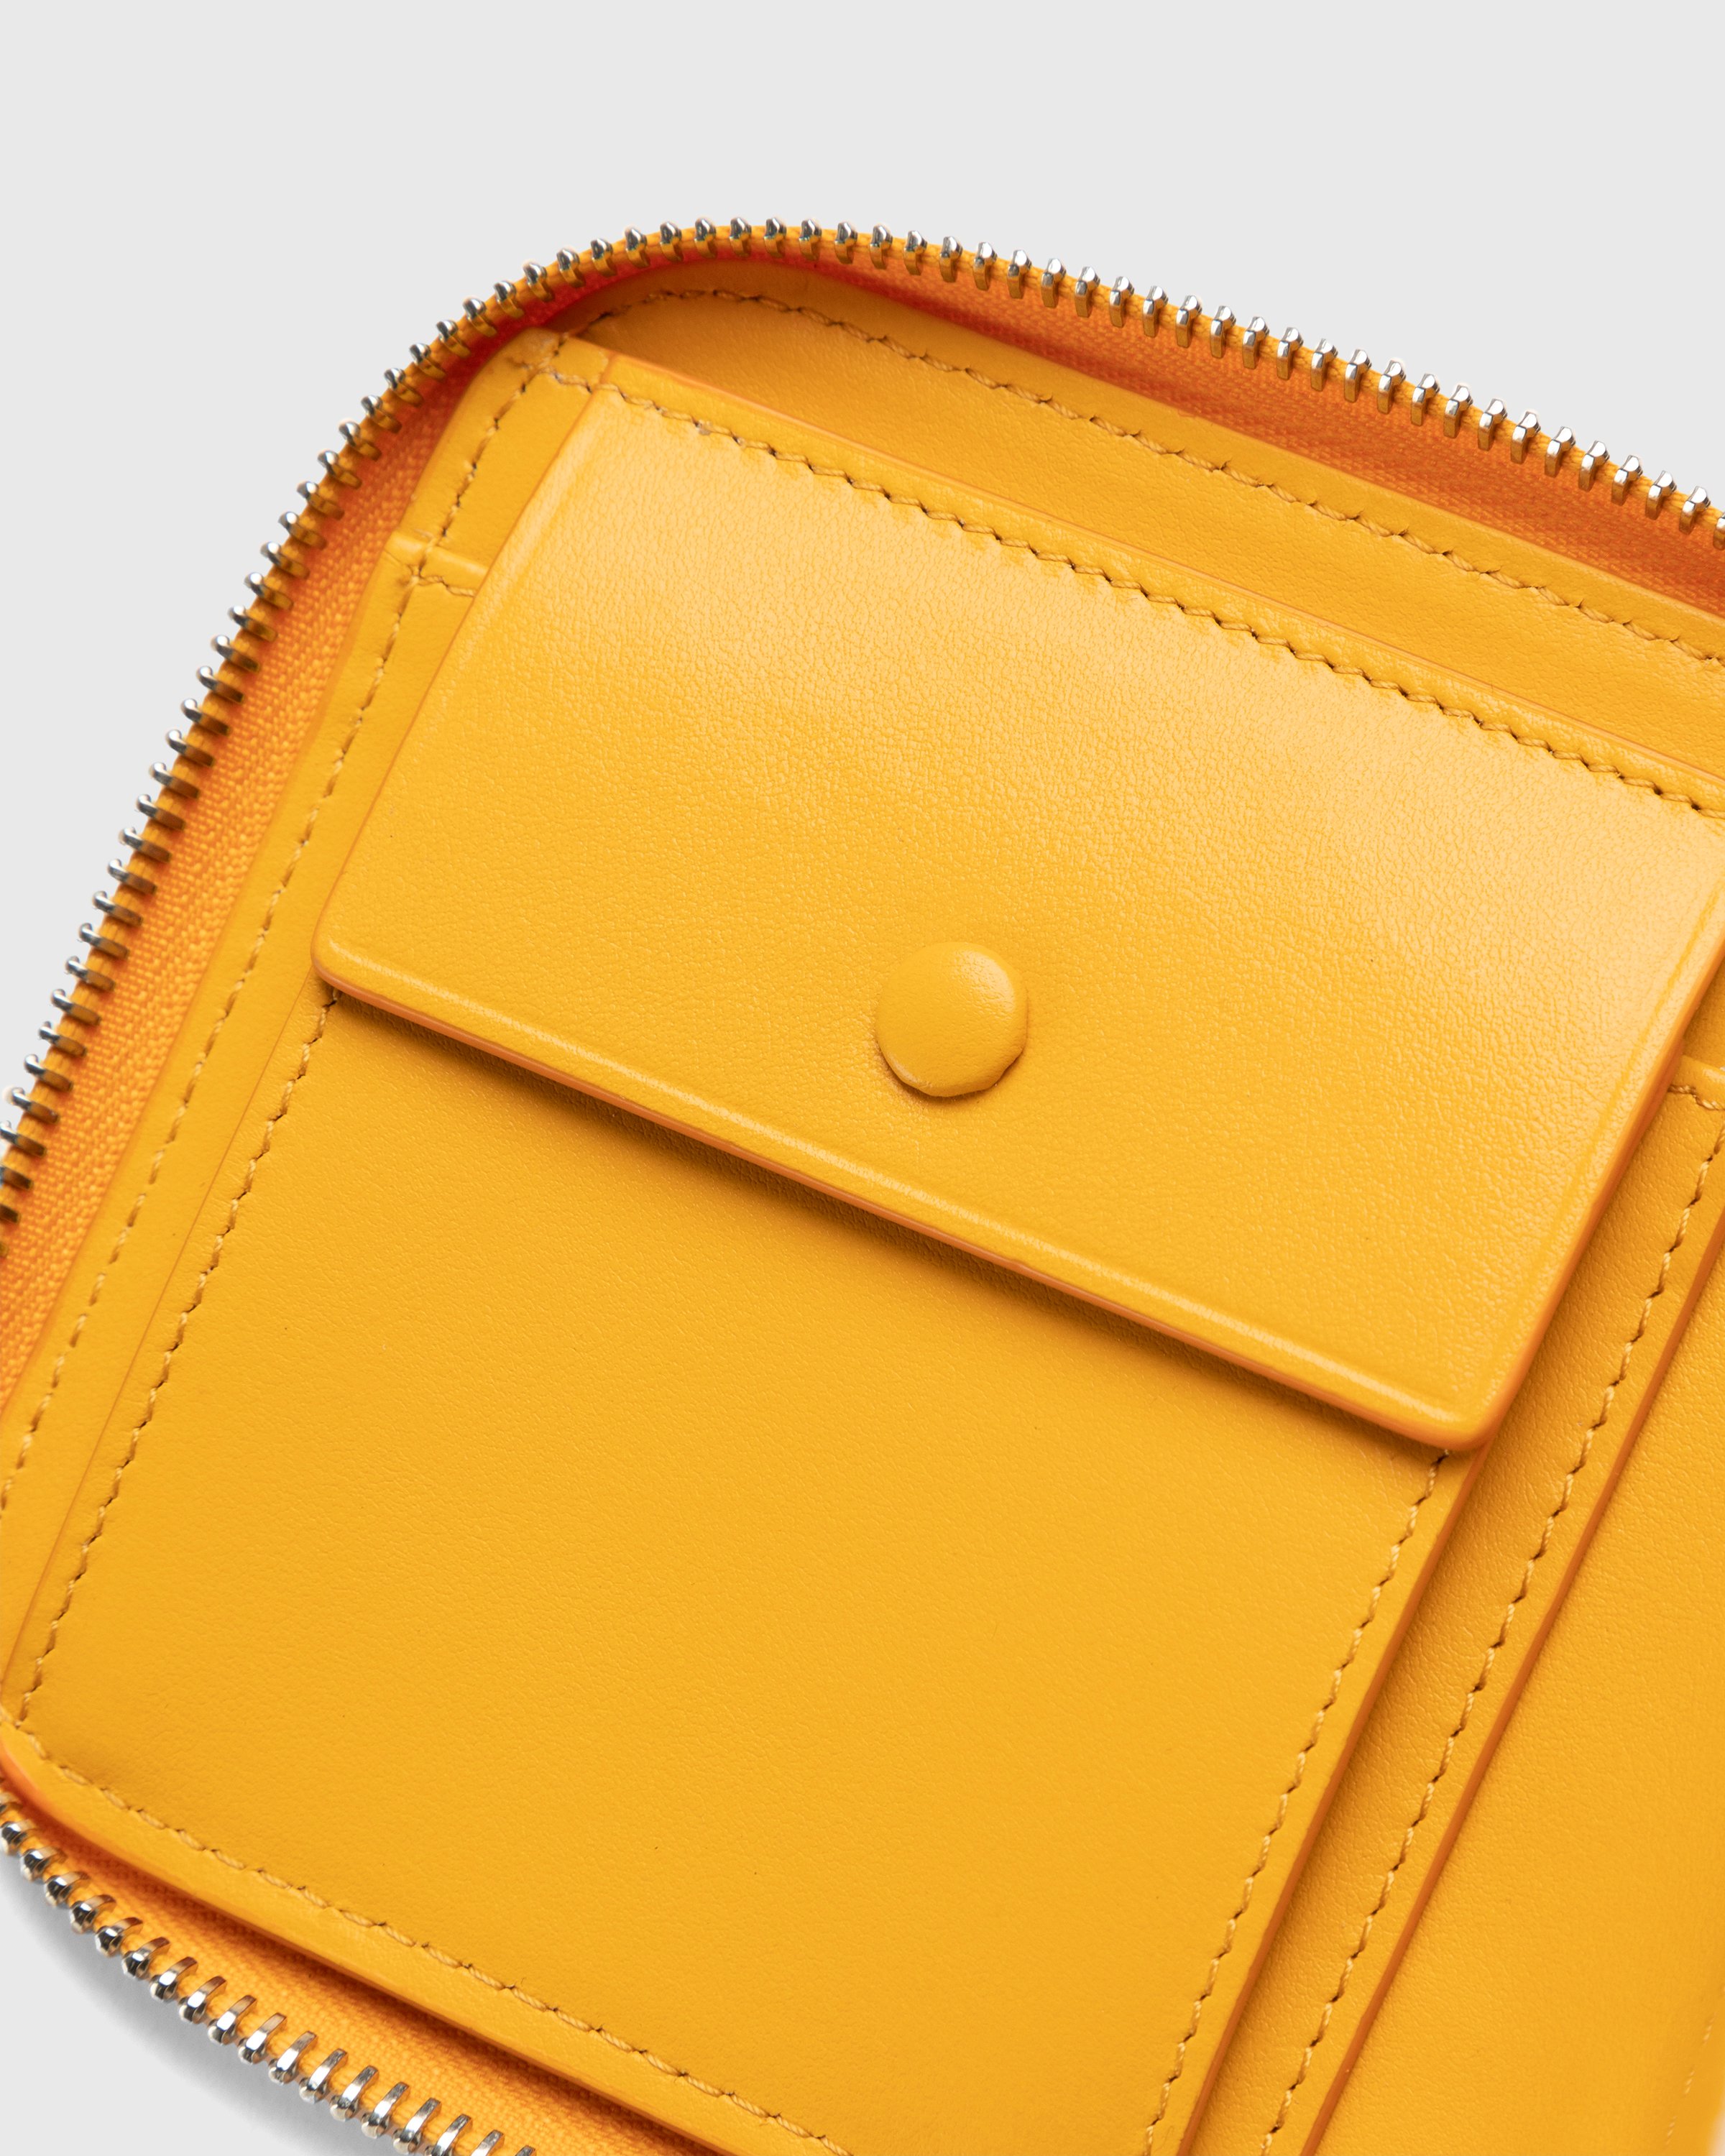 Acne Studios - Leather Zip Wallet Orange - Accessories - Orange - Image 4